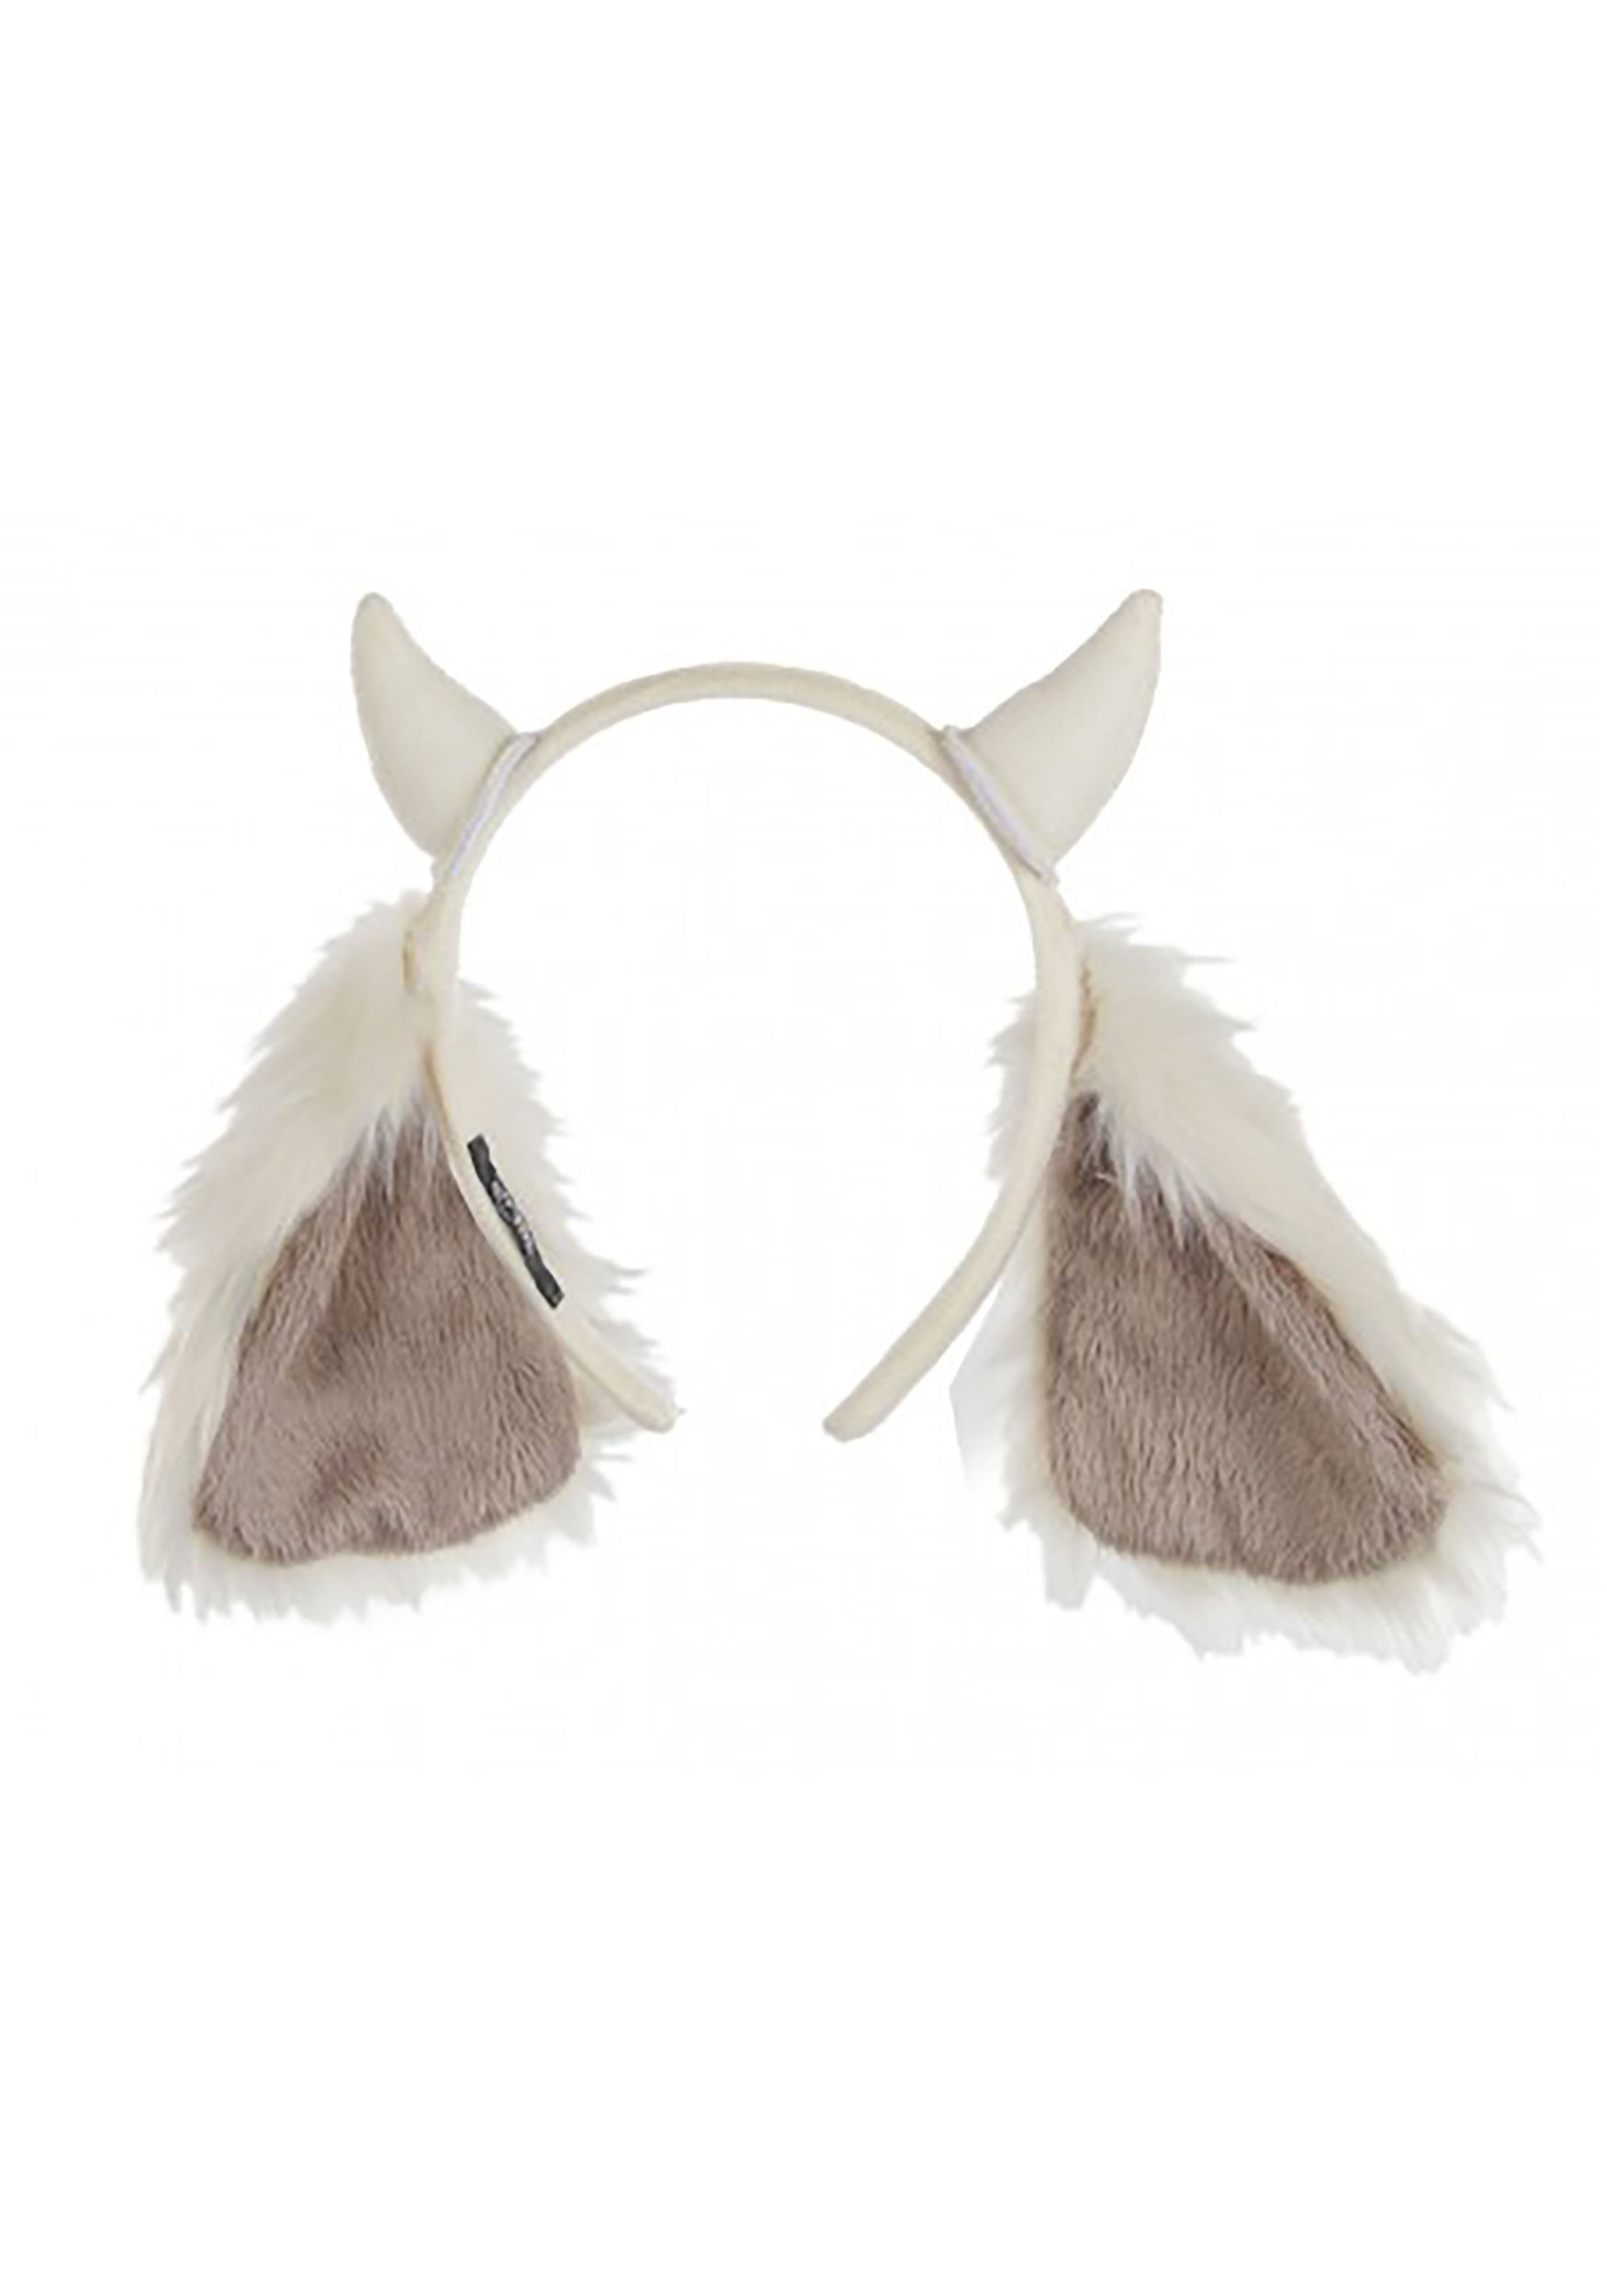 Goat Ears Headband Costume